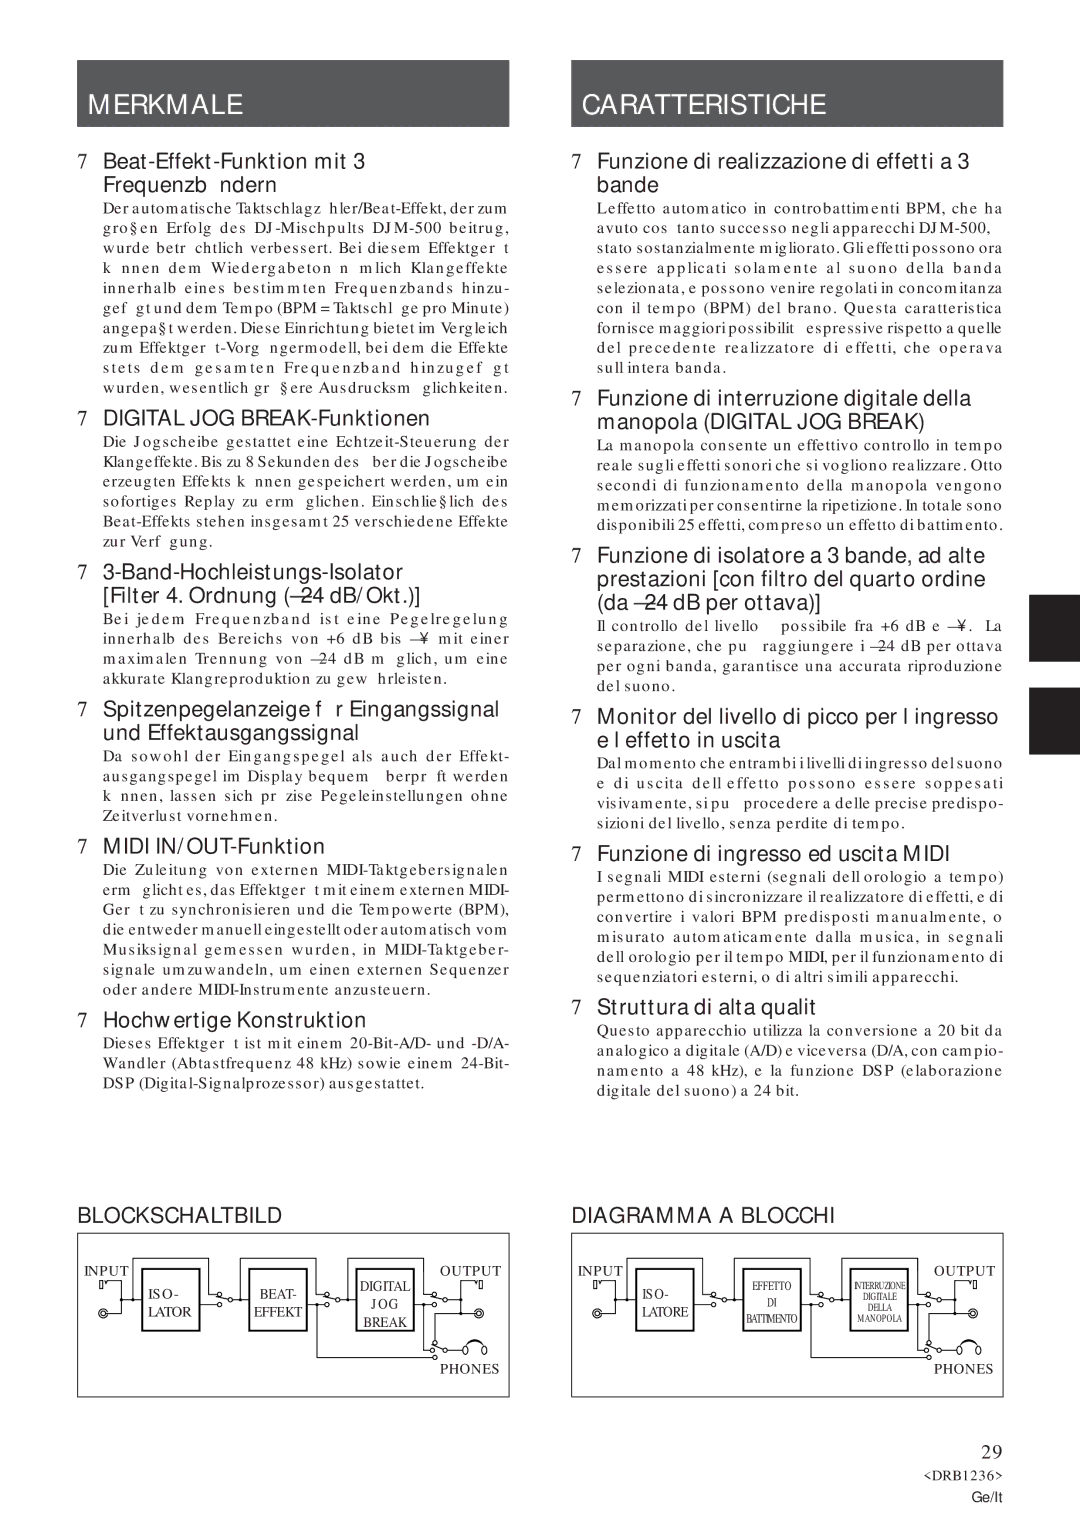 Pioneer Efx-500 operating instructions Merkmale, Caratteristiche, Blockschaltbild, Diagramma a Blocchi 